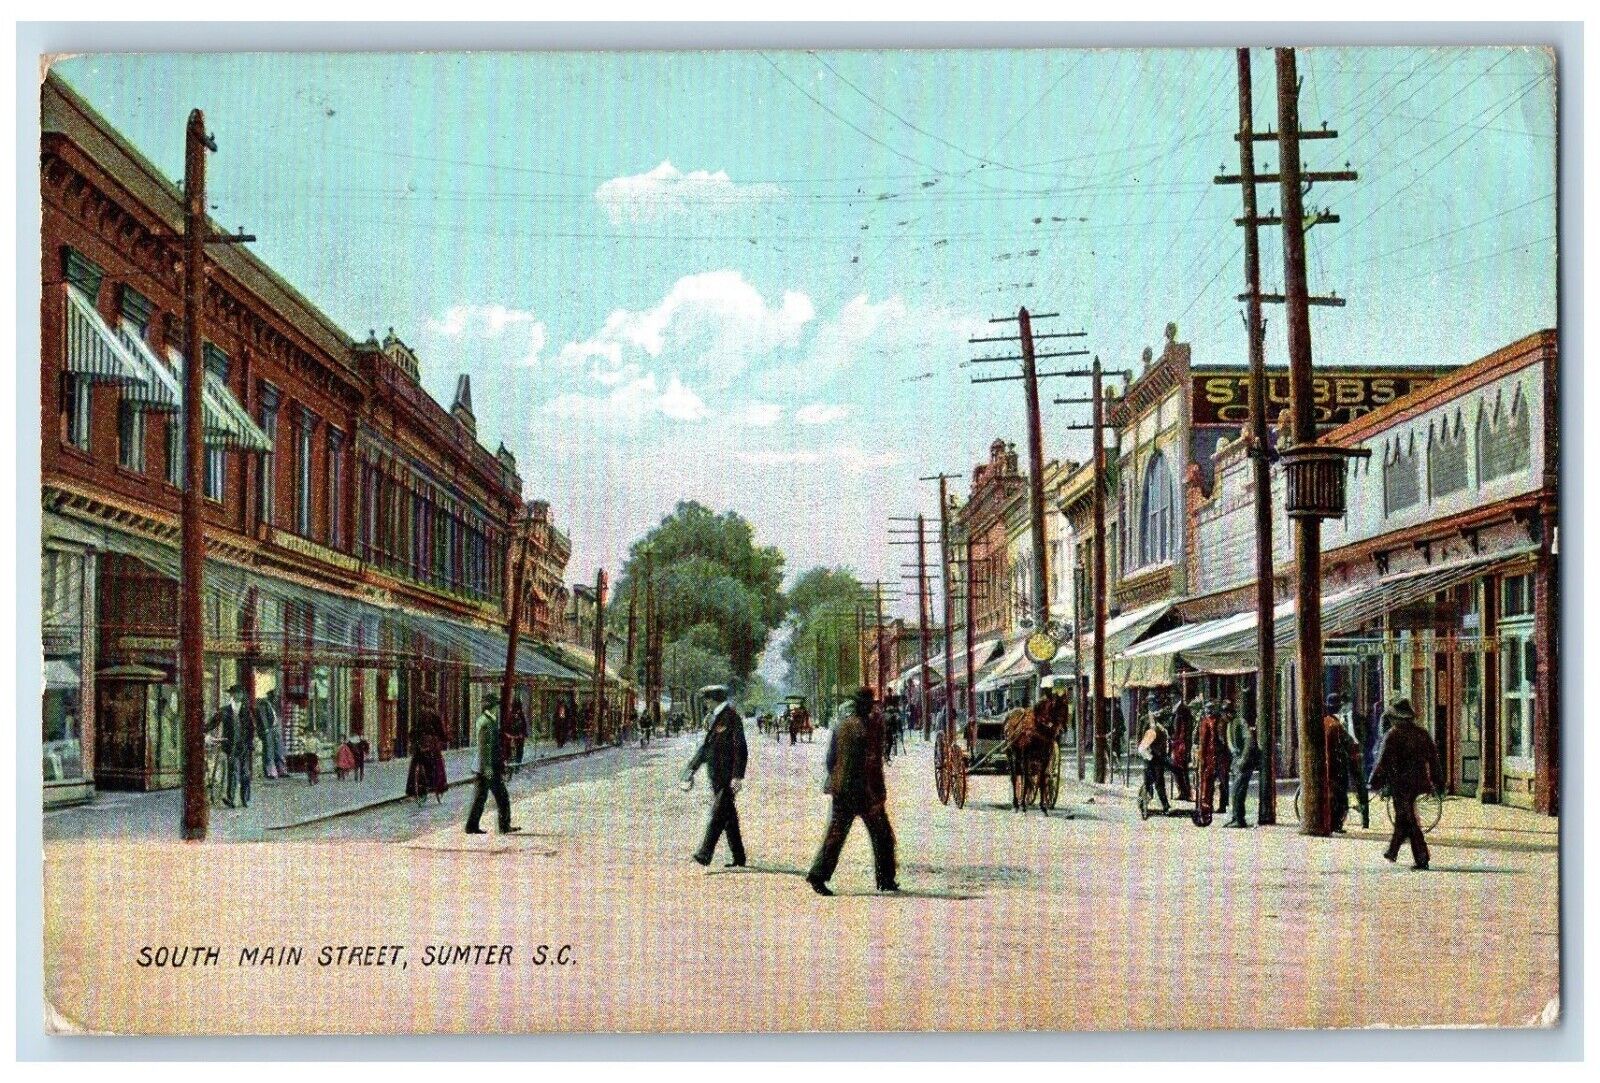 Sumter South Carolina Postcard South Main Street Exterior c1909 Vintage Antique